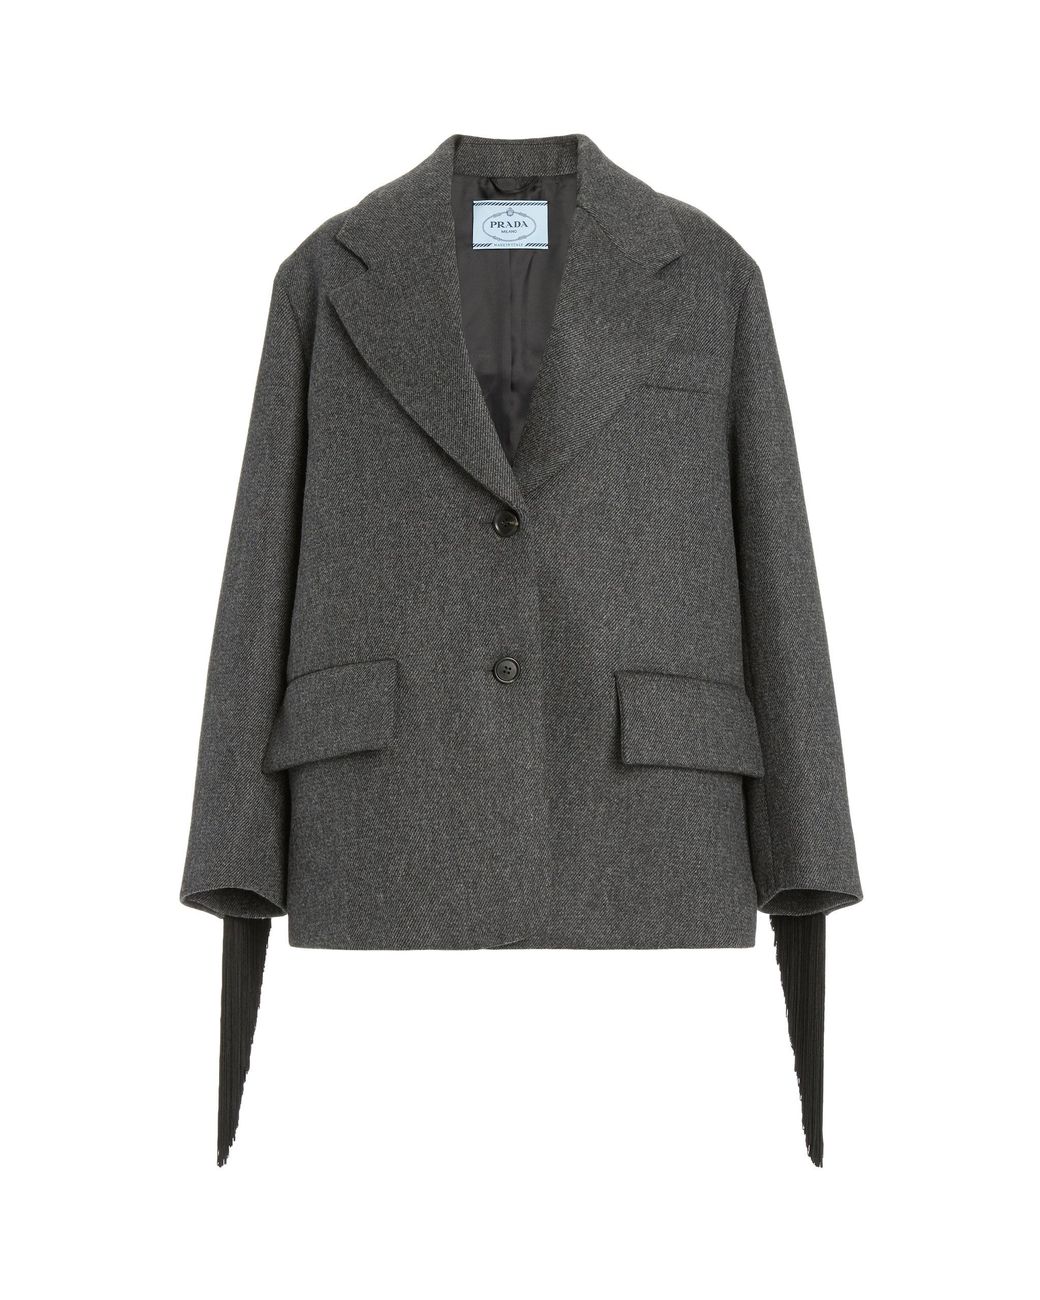 Prada Oversized Single-breasted Wool Jacket in Grey (Gray) - Lyst